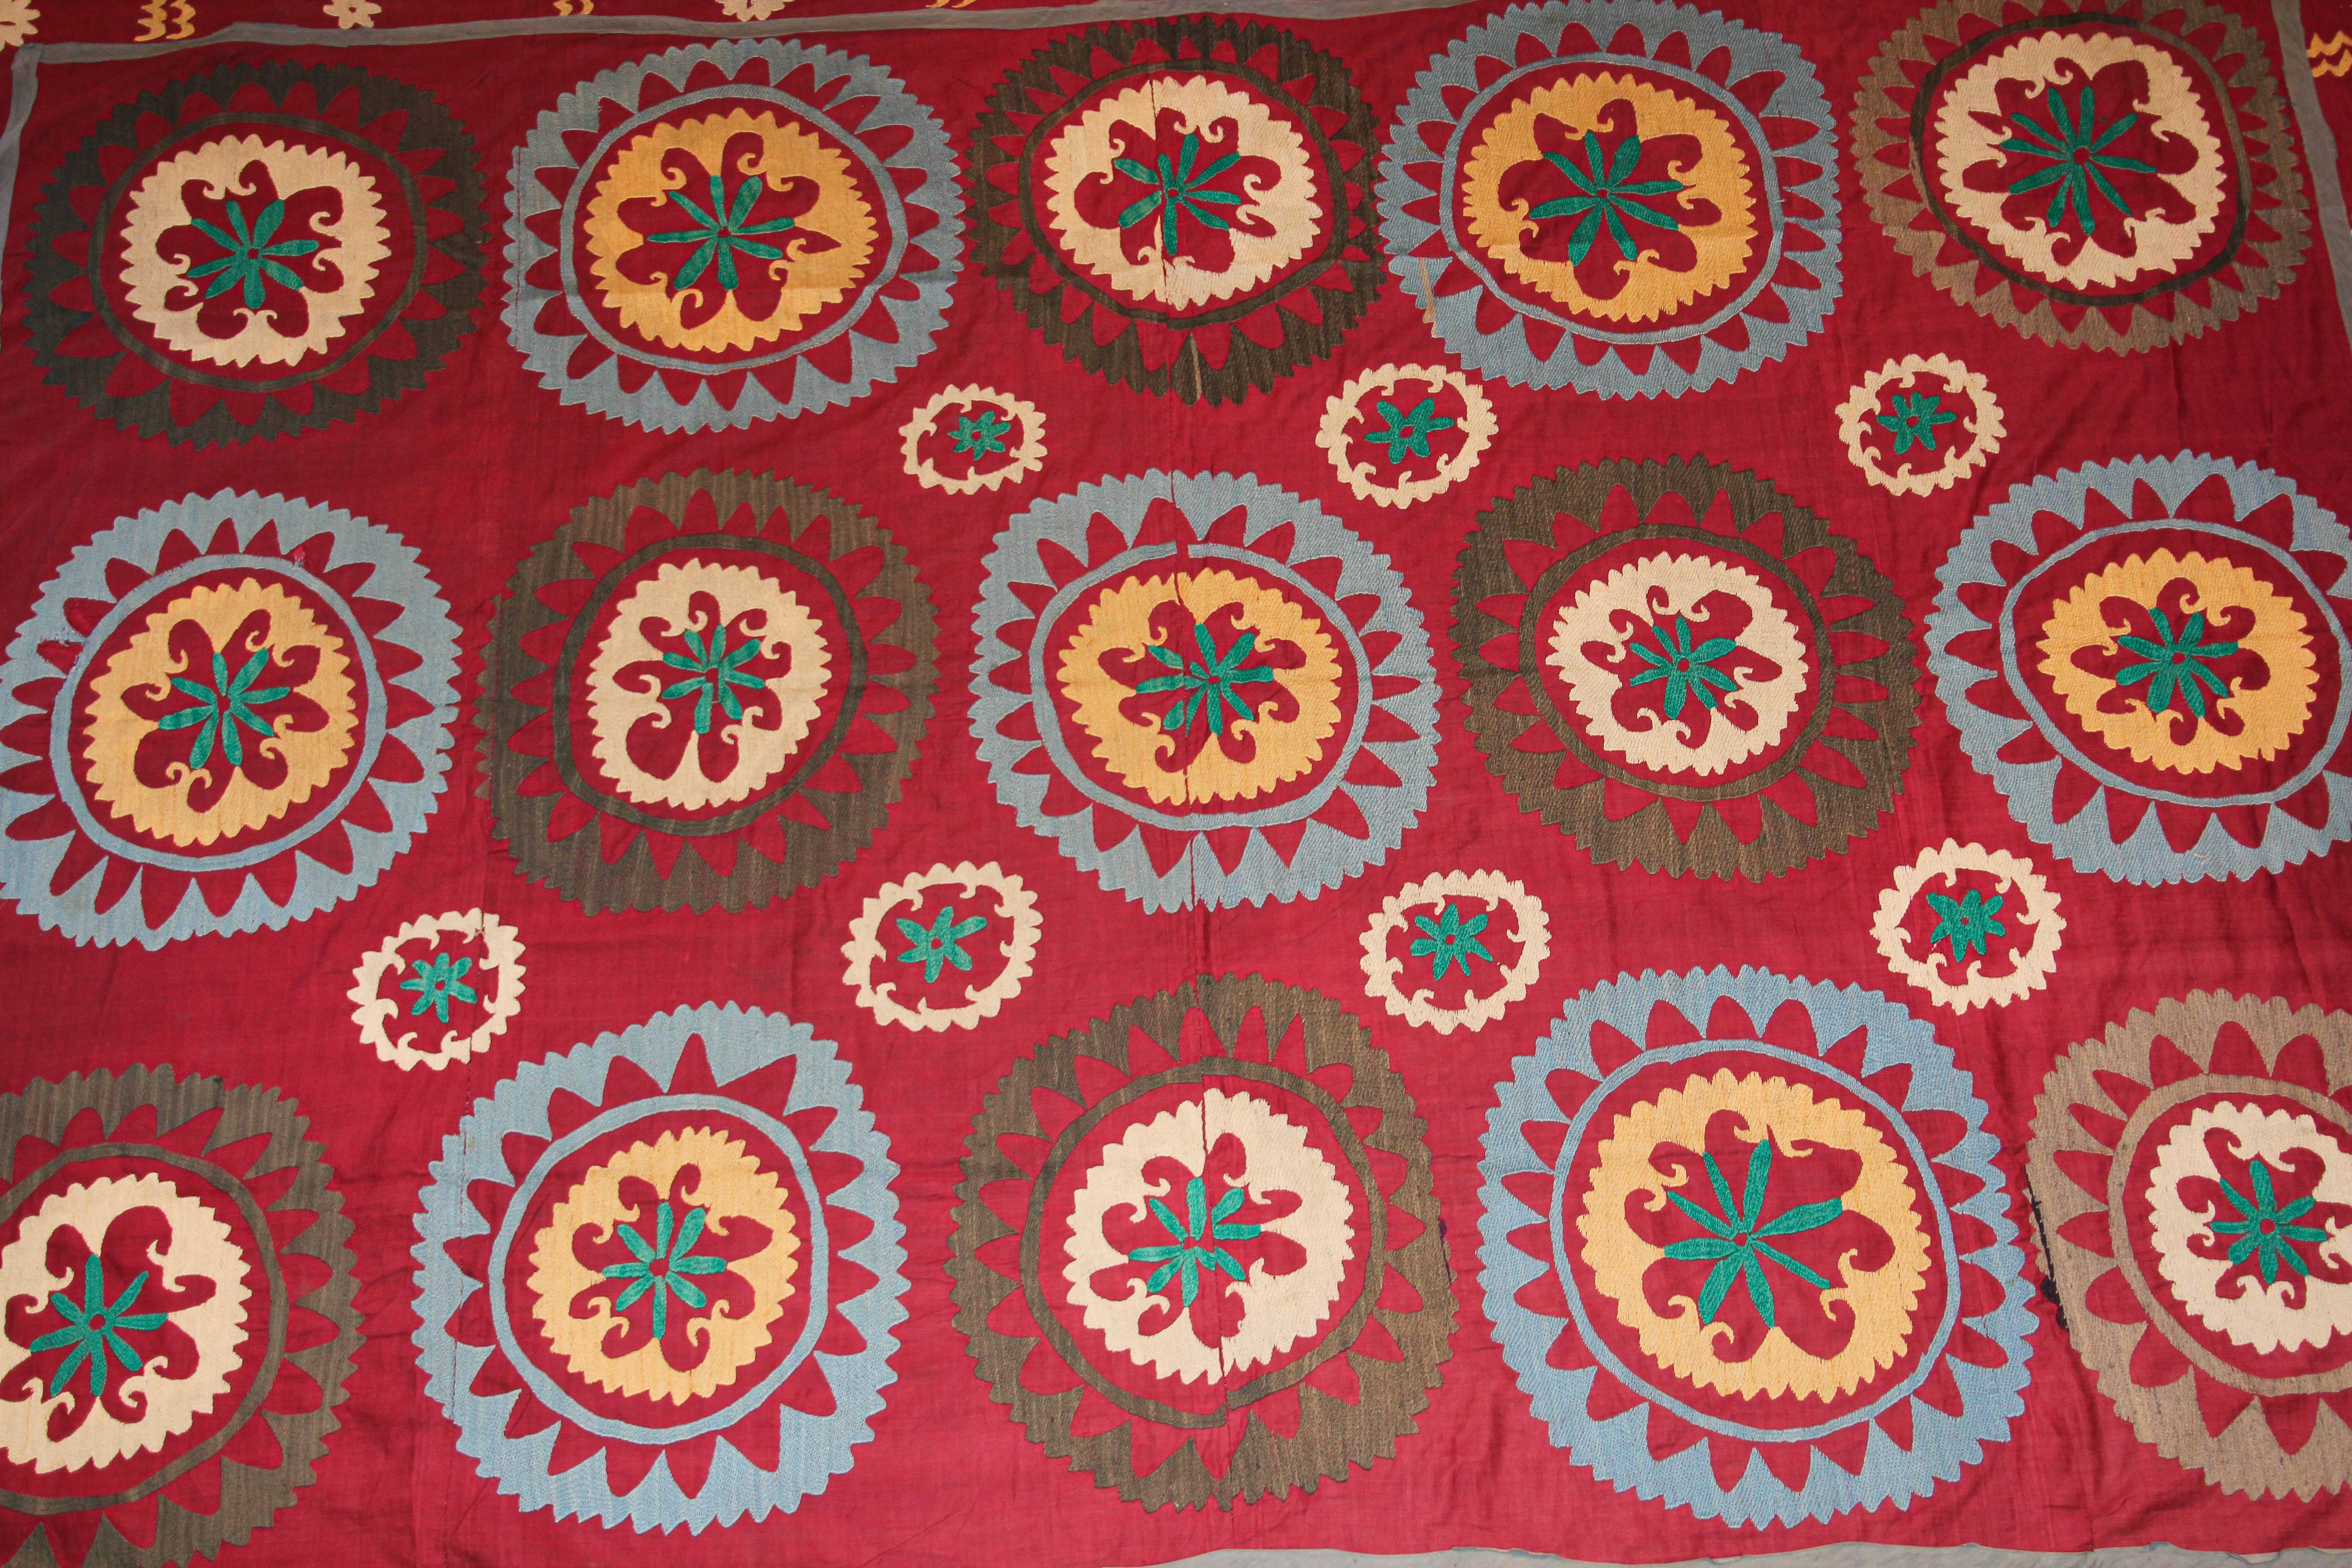 Vintage Uzbek Suzani Needlework Textile Blanket or Tapestry 7